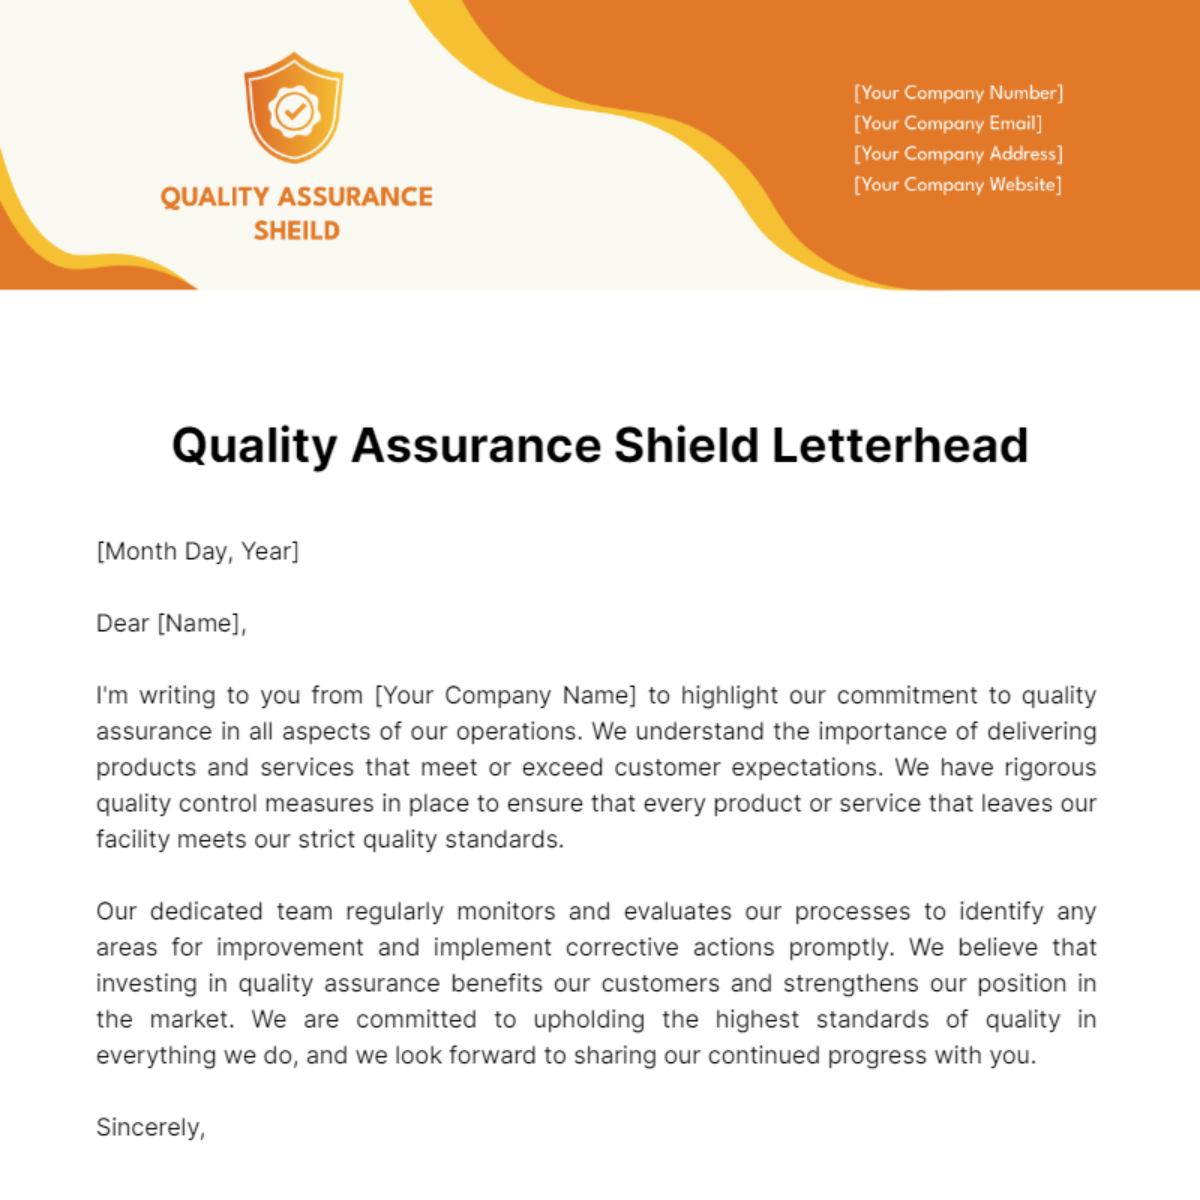 Quality Assurance Shield Letterhead Template